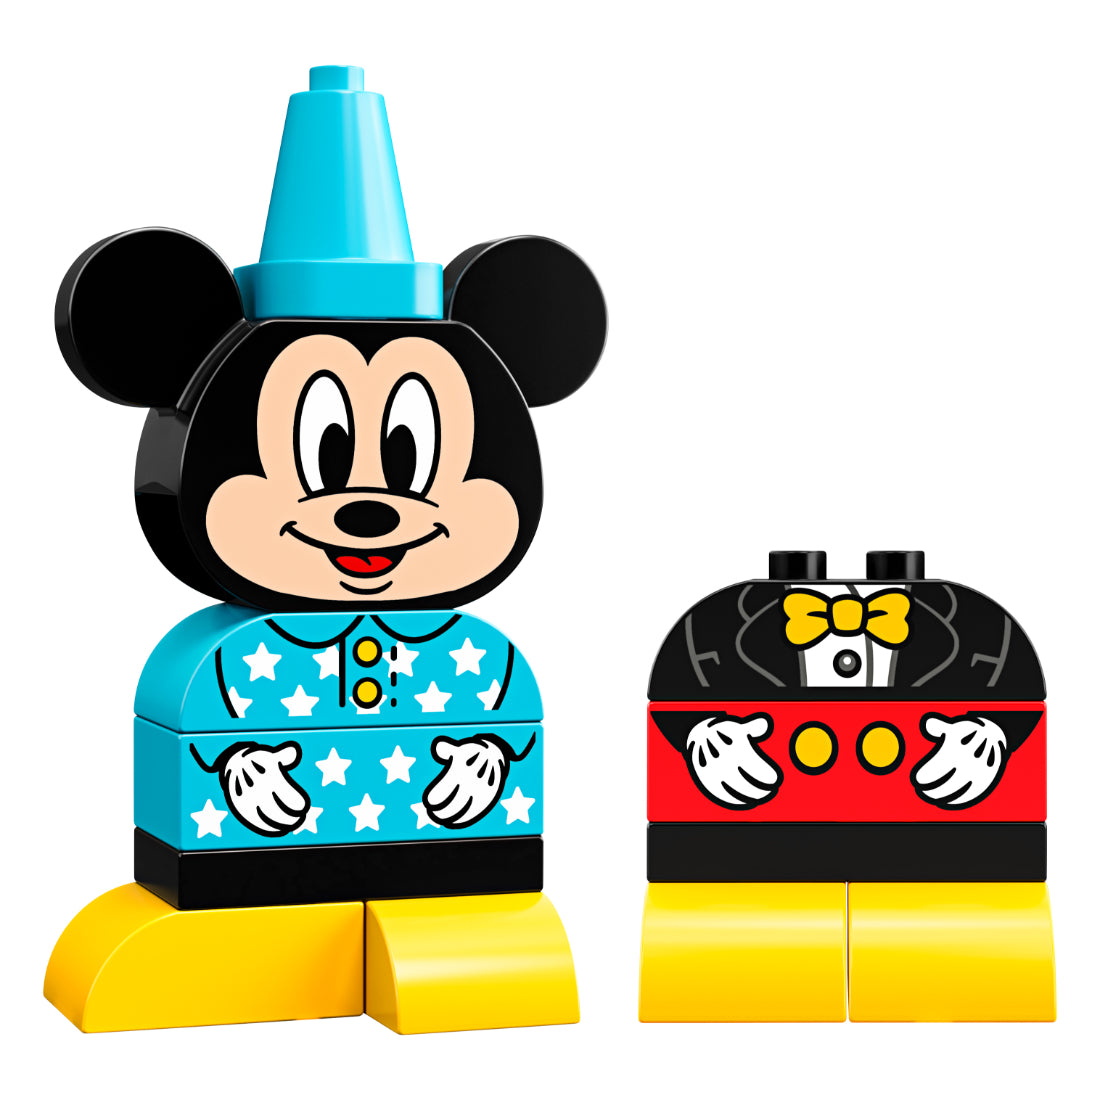 LEGO® DUPLO® Disney Mi Primer Modelo de Mickey (10898)